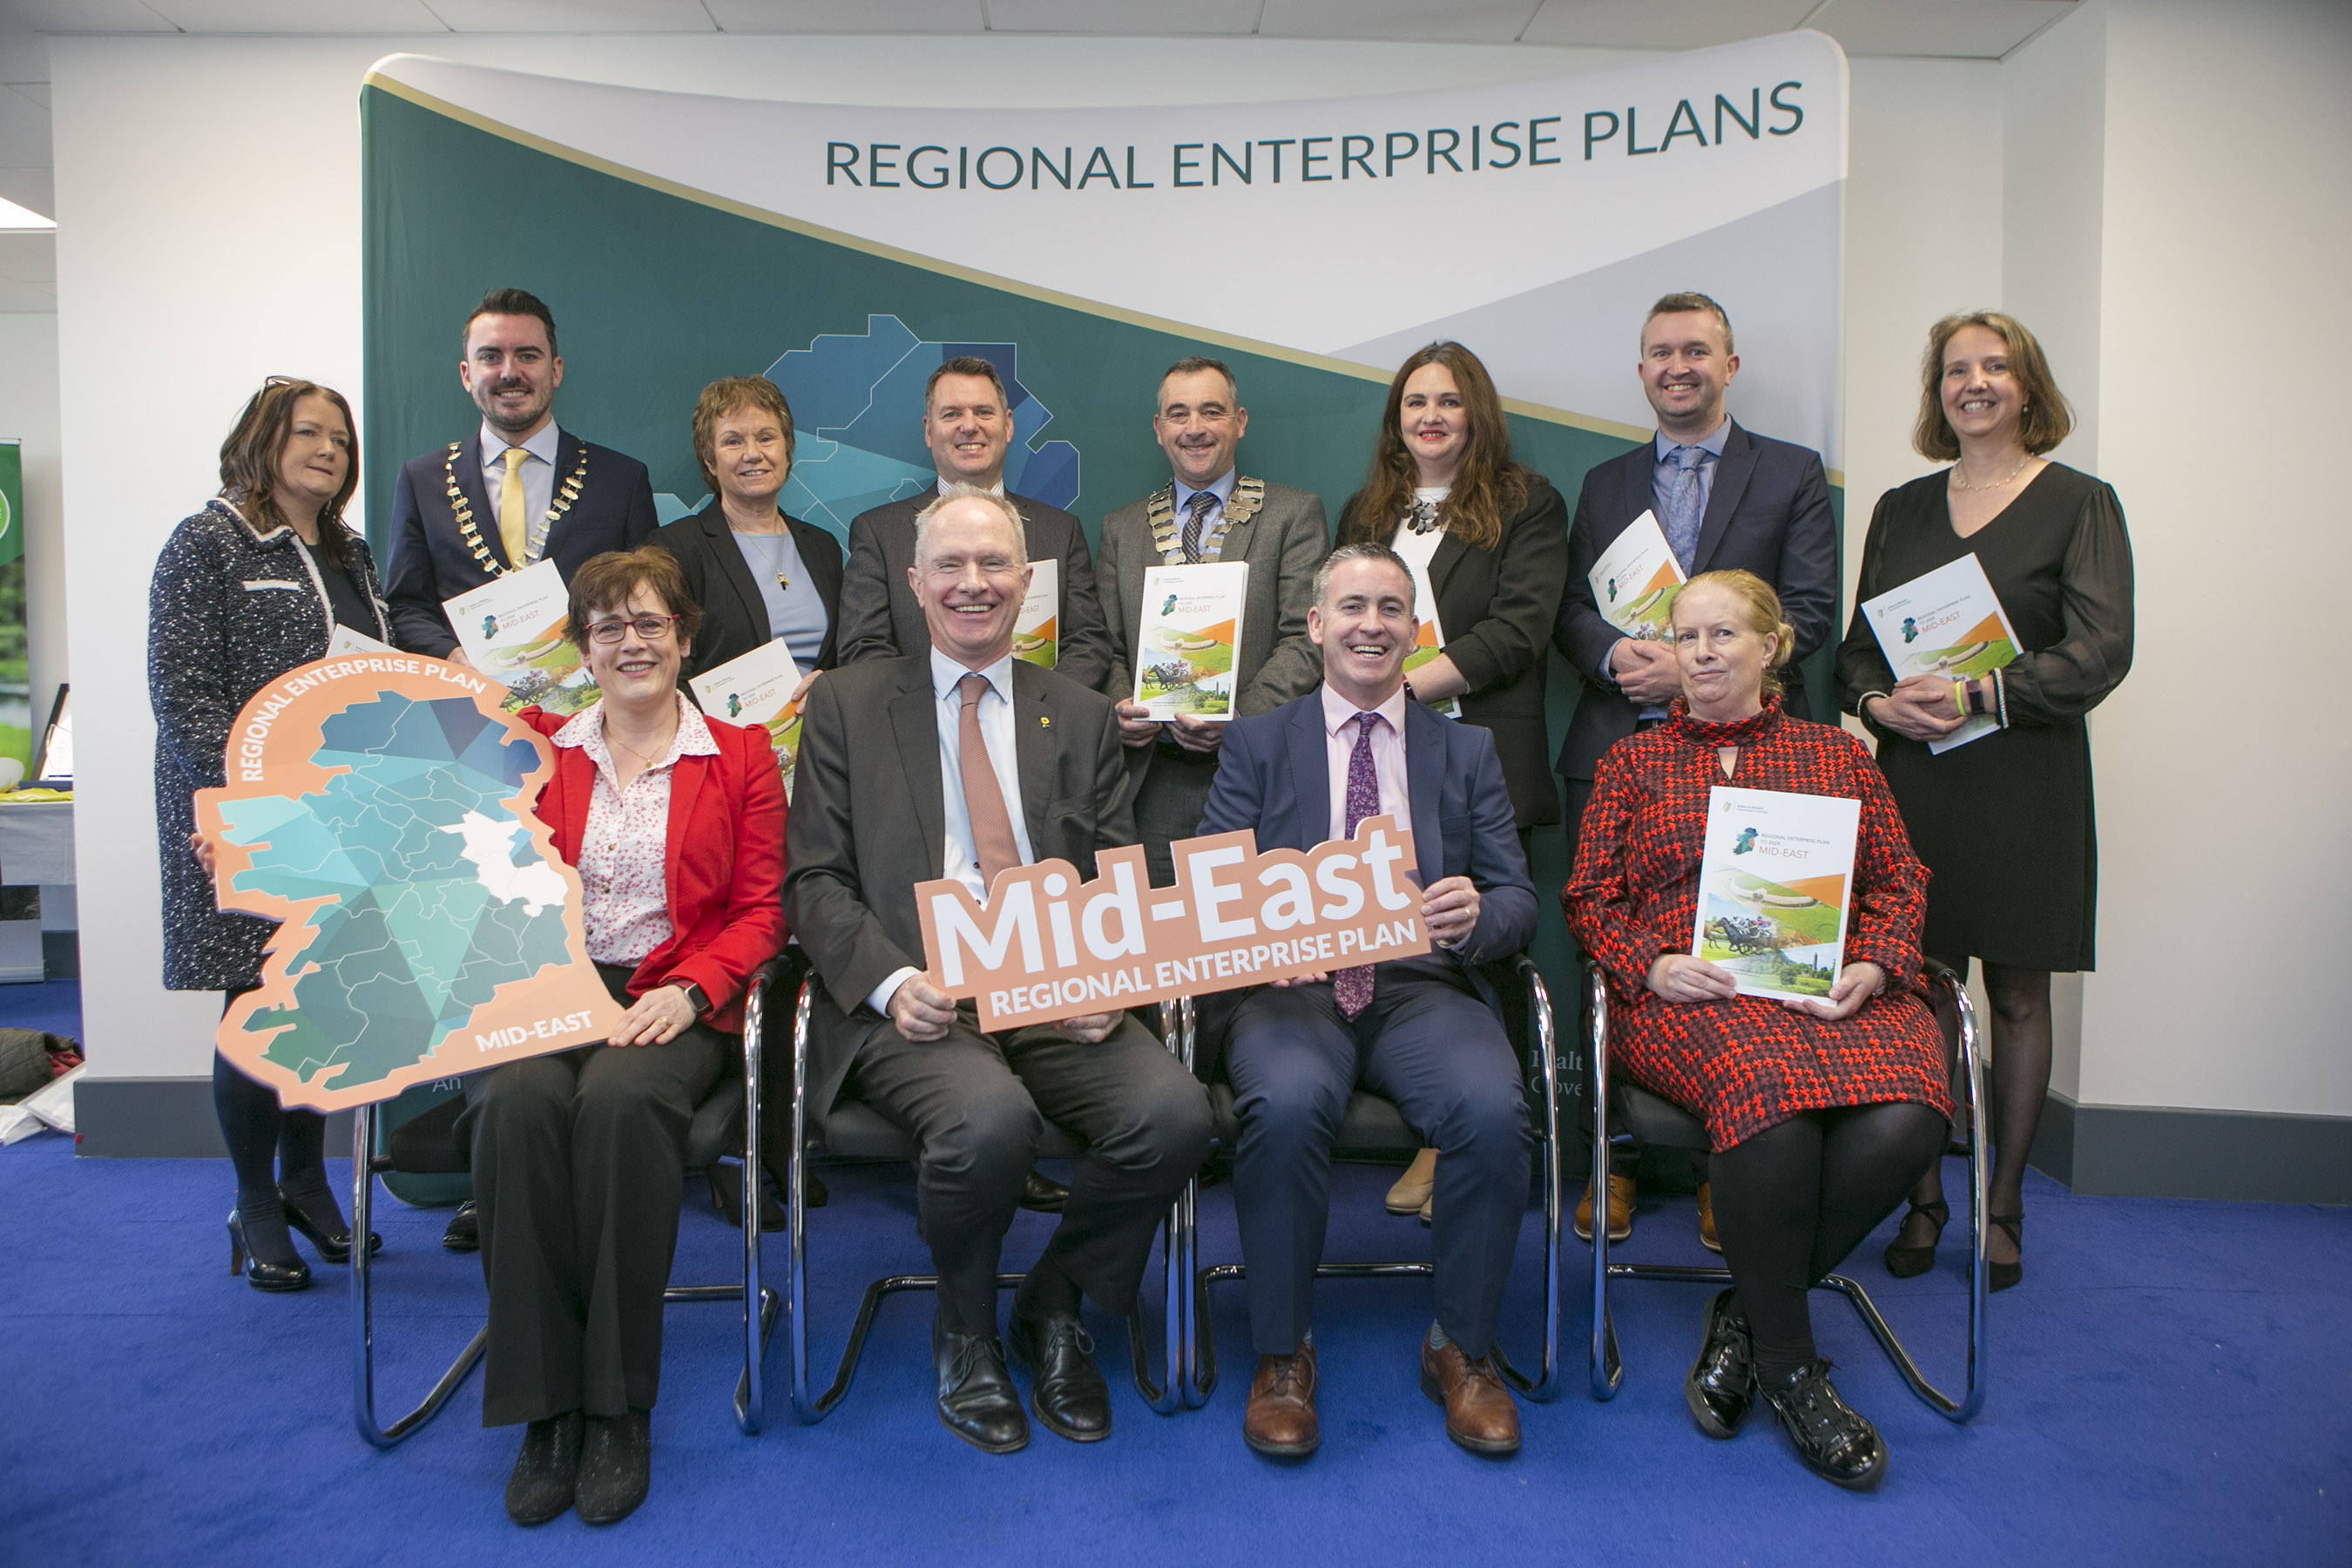 Mid-East Regional Enterprise Plan